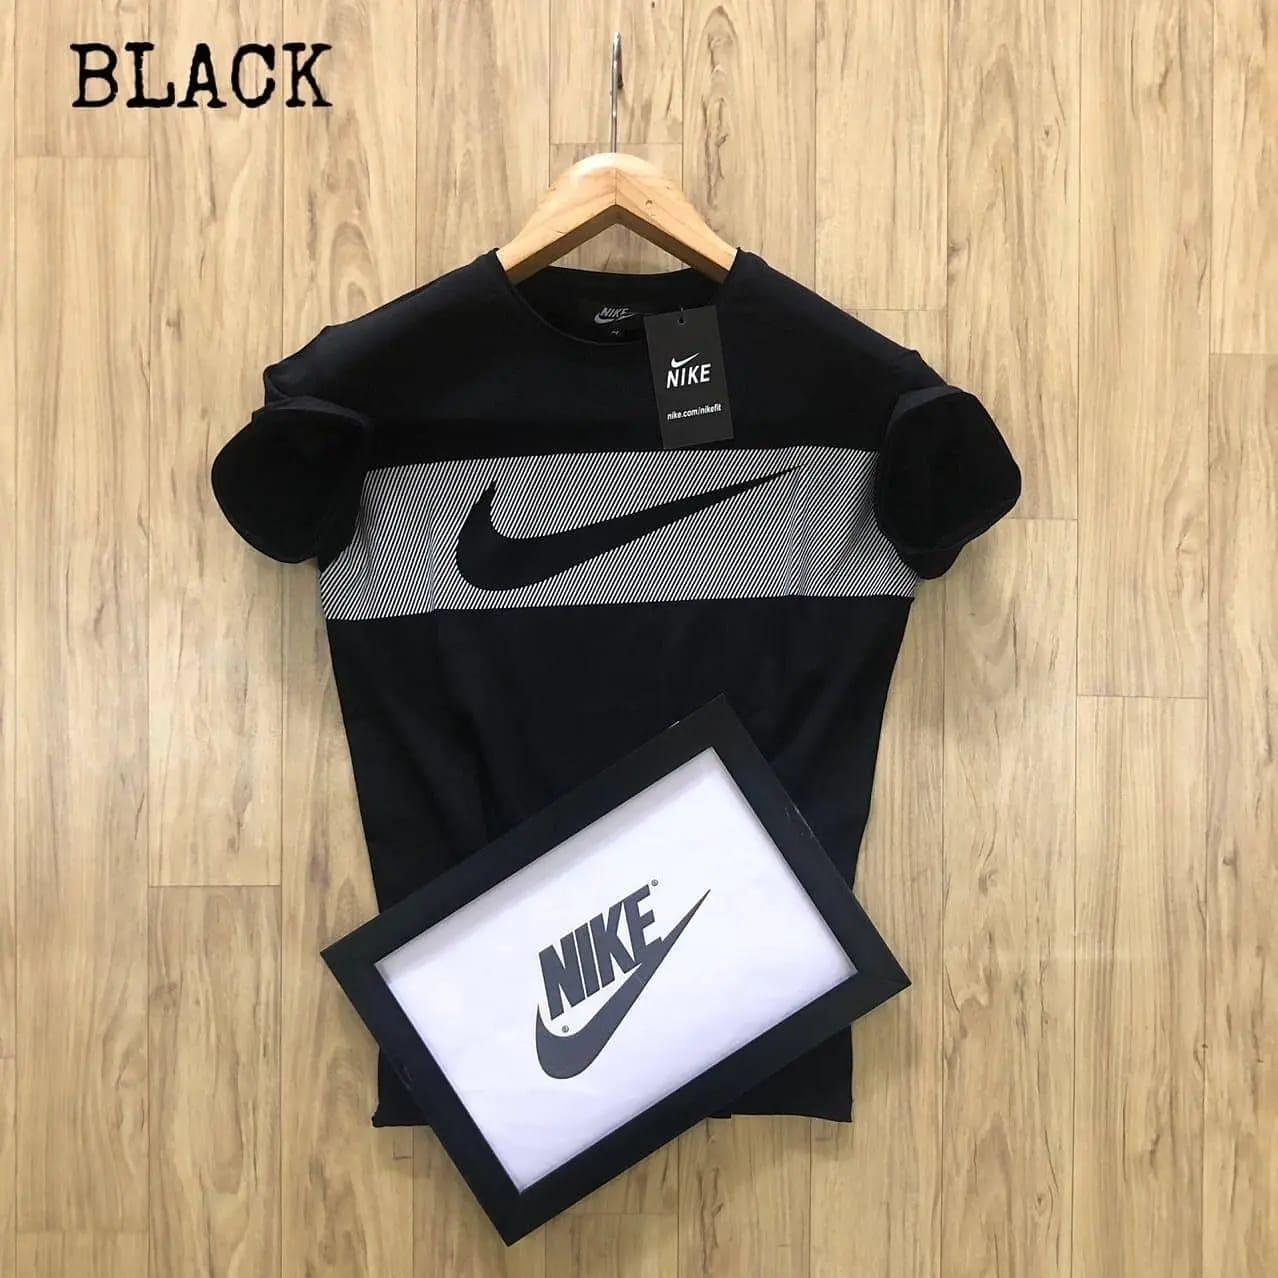 Black Half Sleeves T-Shirt